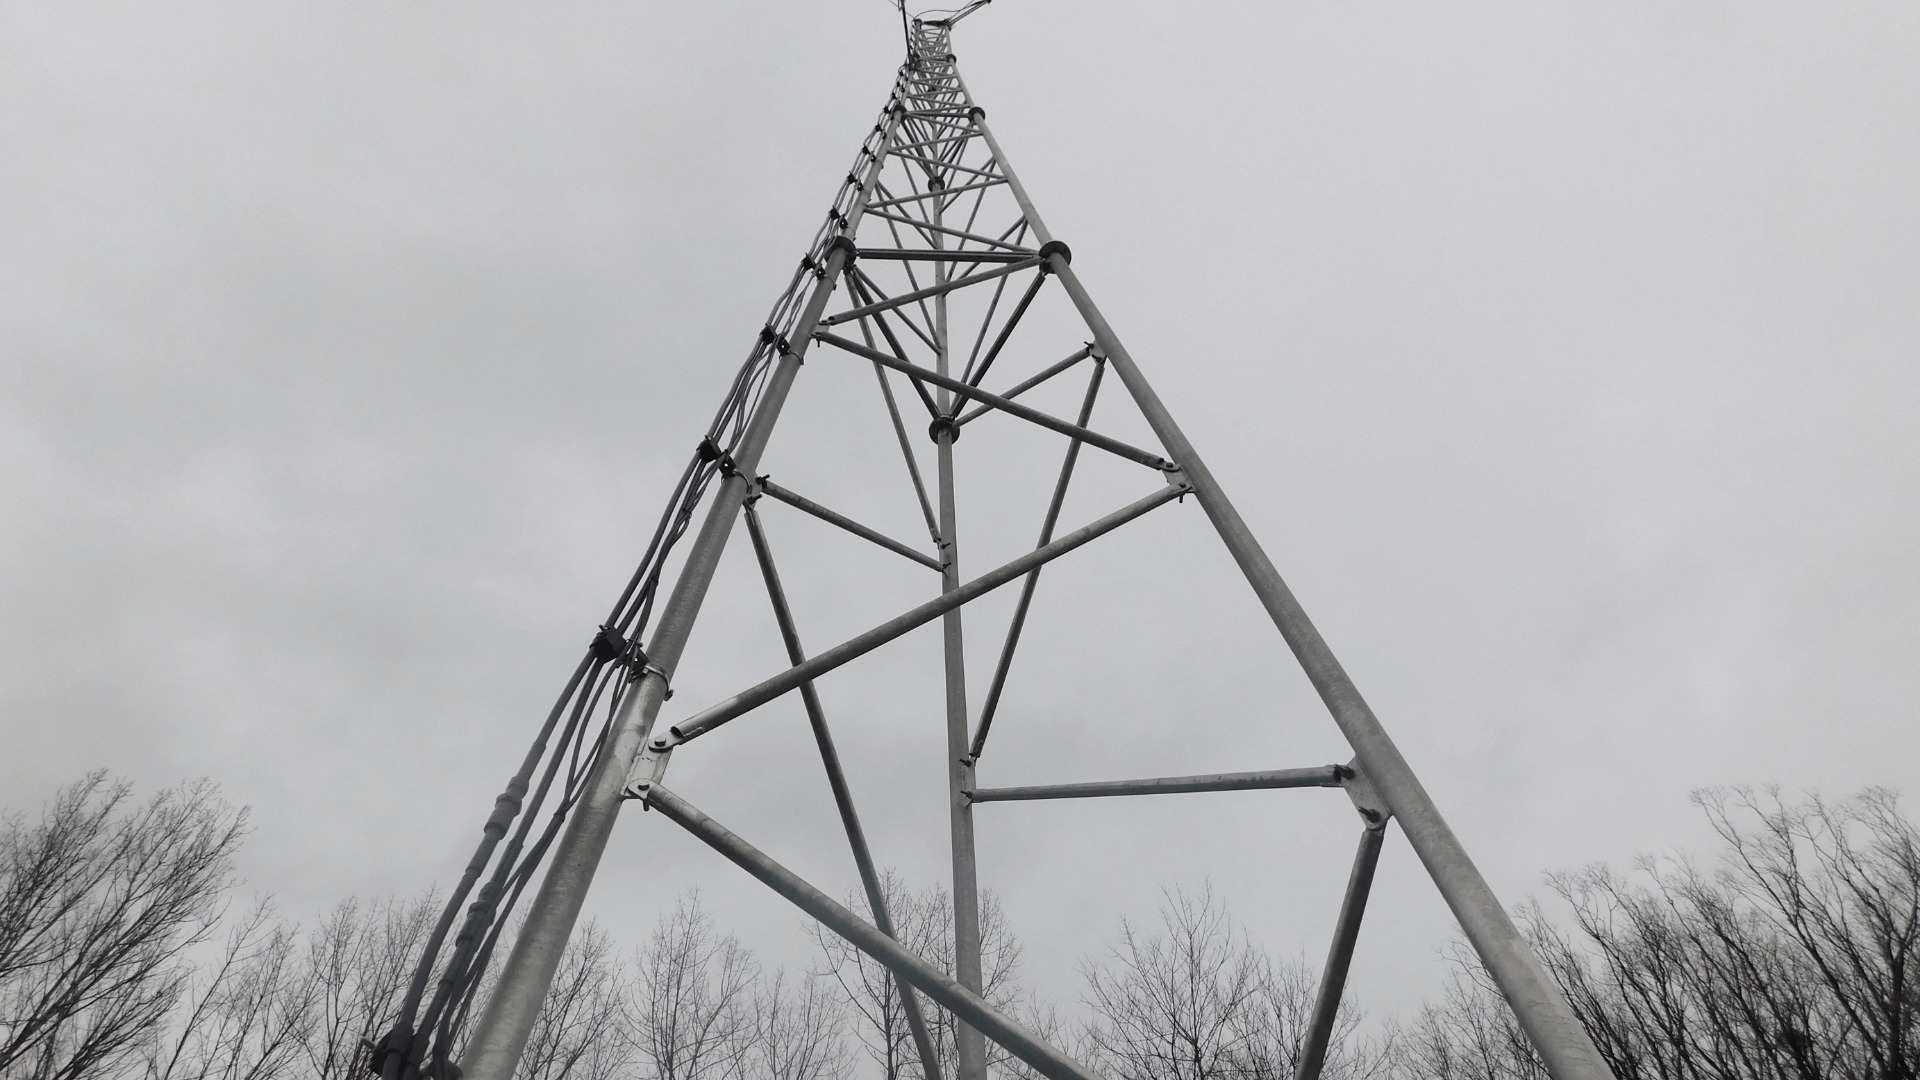 S-tower Telekomunikacja